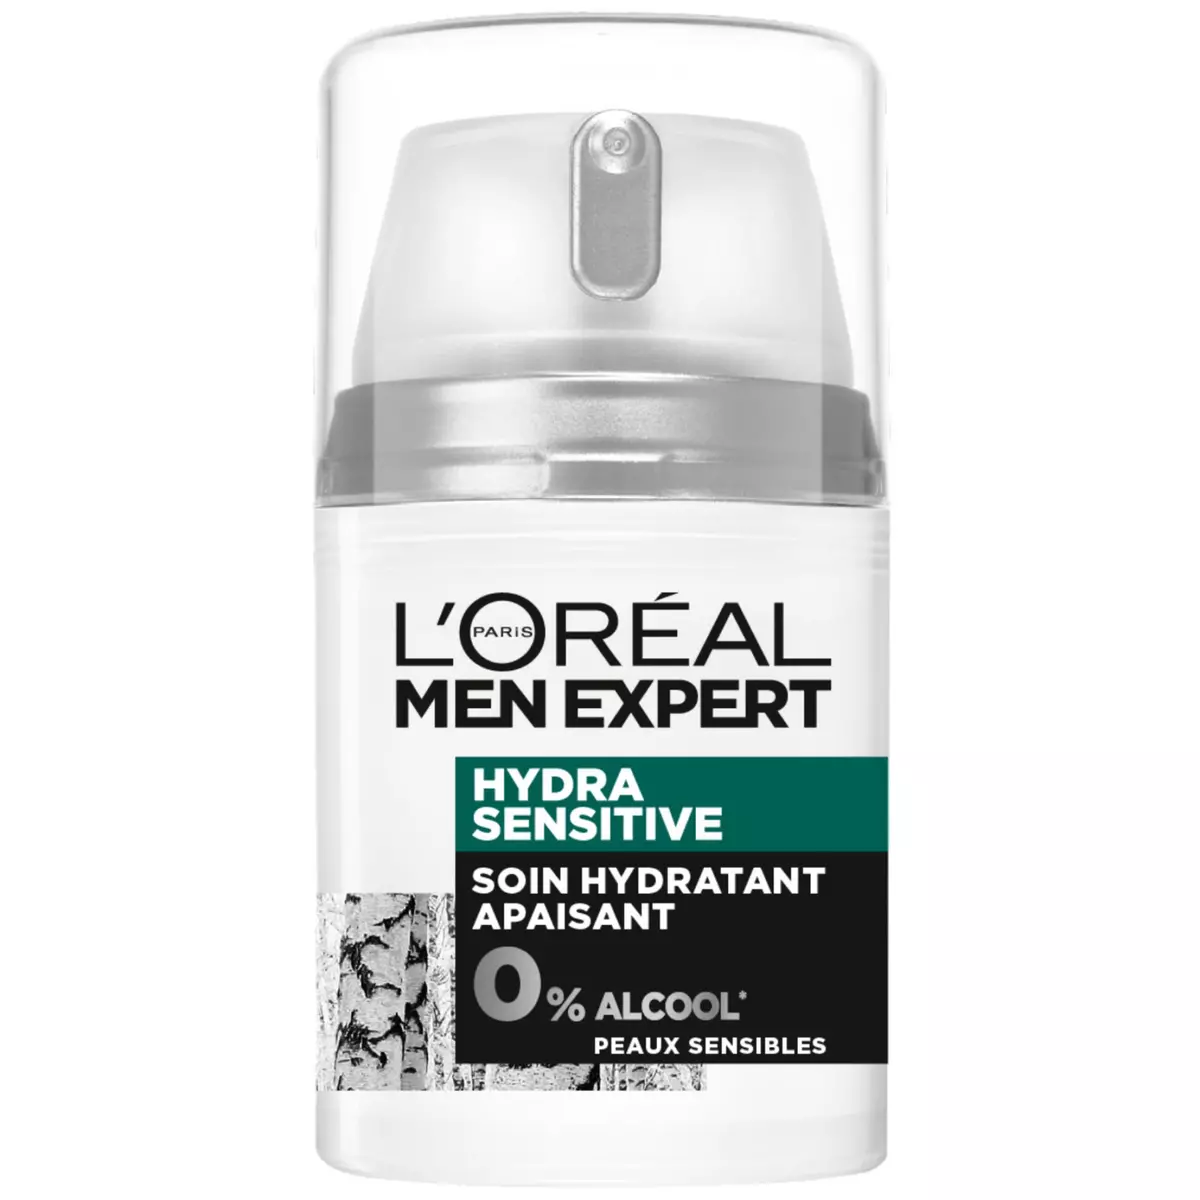 L'OREAL Men Expert Hydra Sensitive soin hydratant apaisant peaux sensibles 50ml